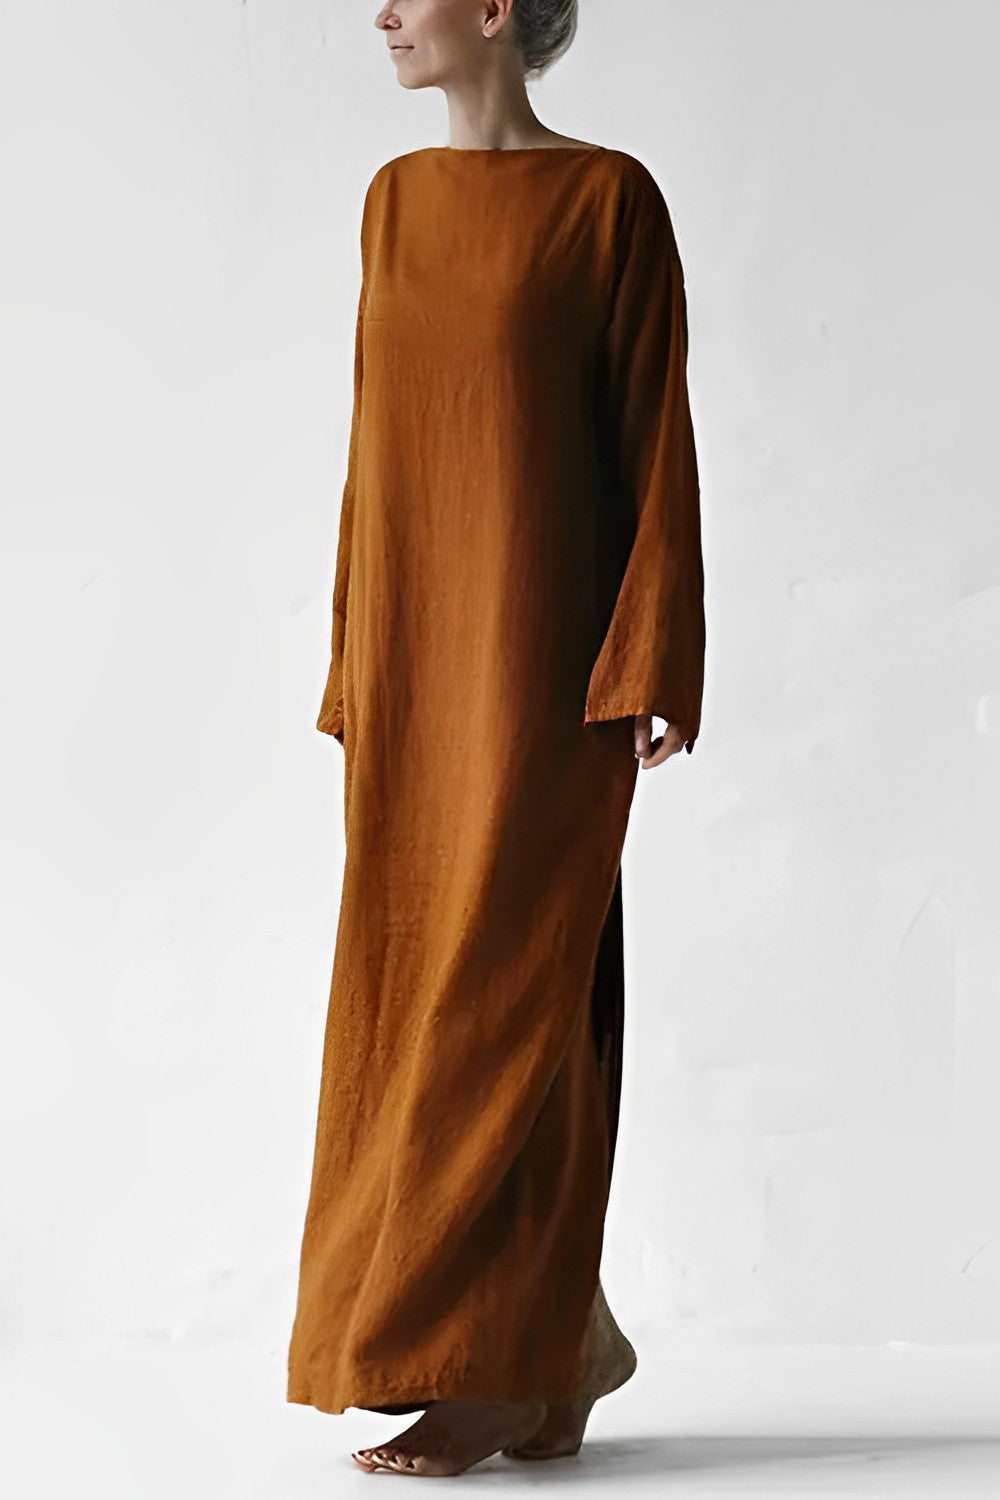 Inès Lavigne® - Artistic stylish dress